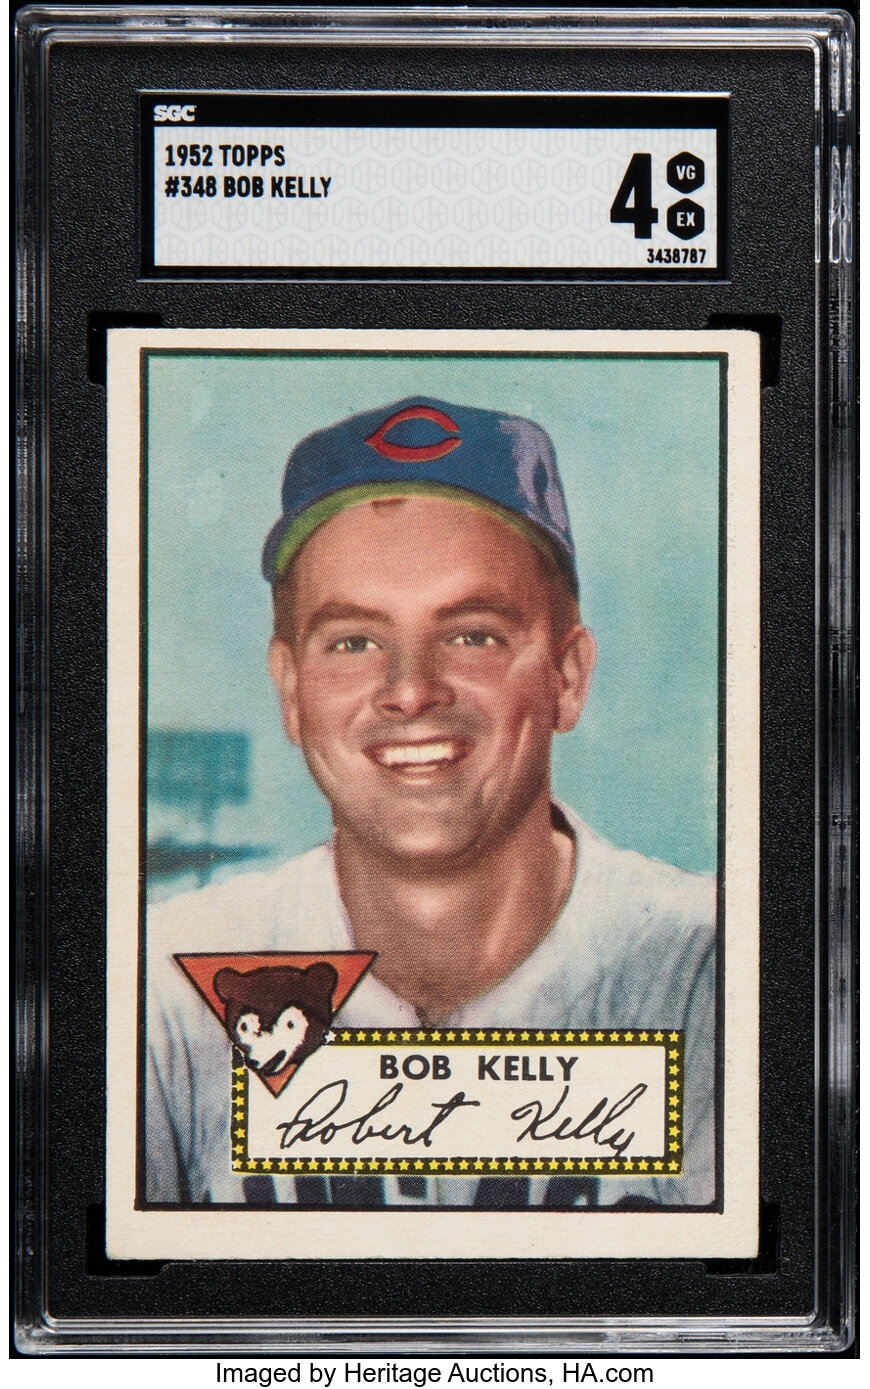 1952 Topps Bob Kelly #348 SGC VG/EX 4